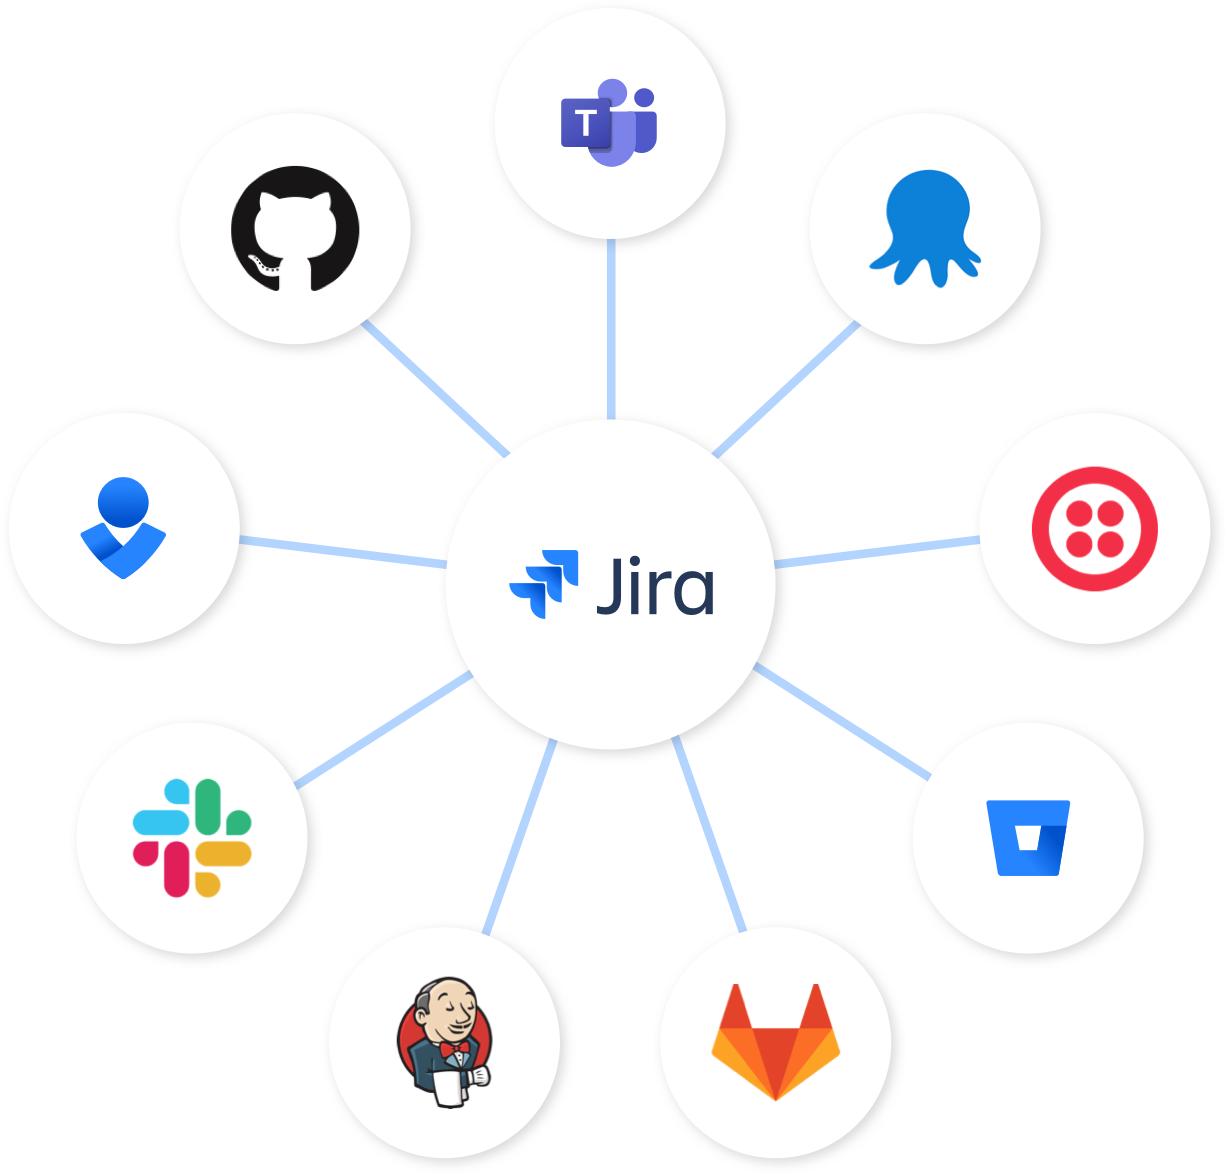 Jira 节点 - Jira 位于中心，与 Bitbucket、Slack 和 Opsgenie 相连